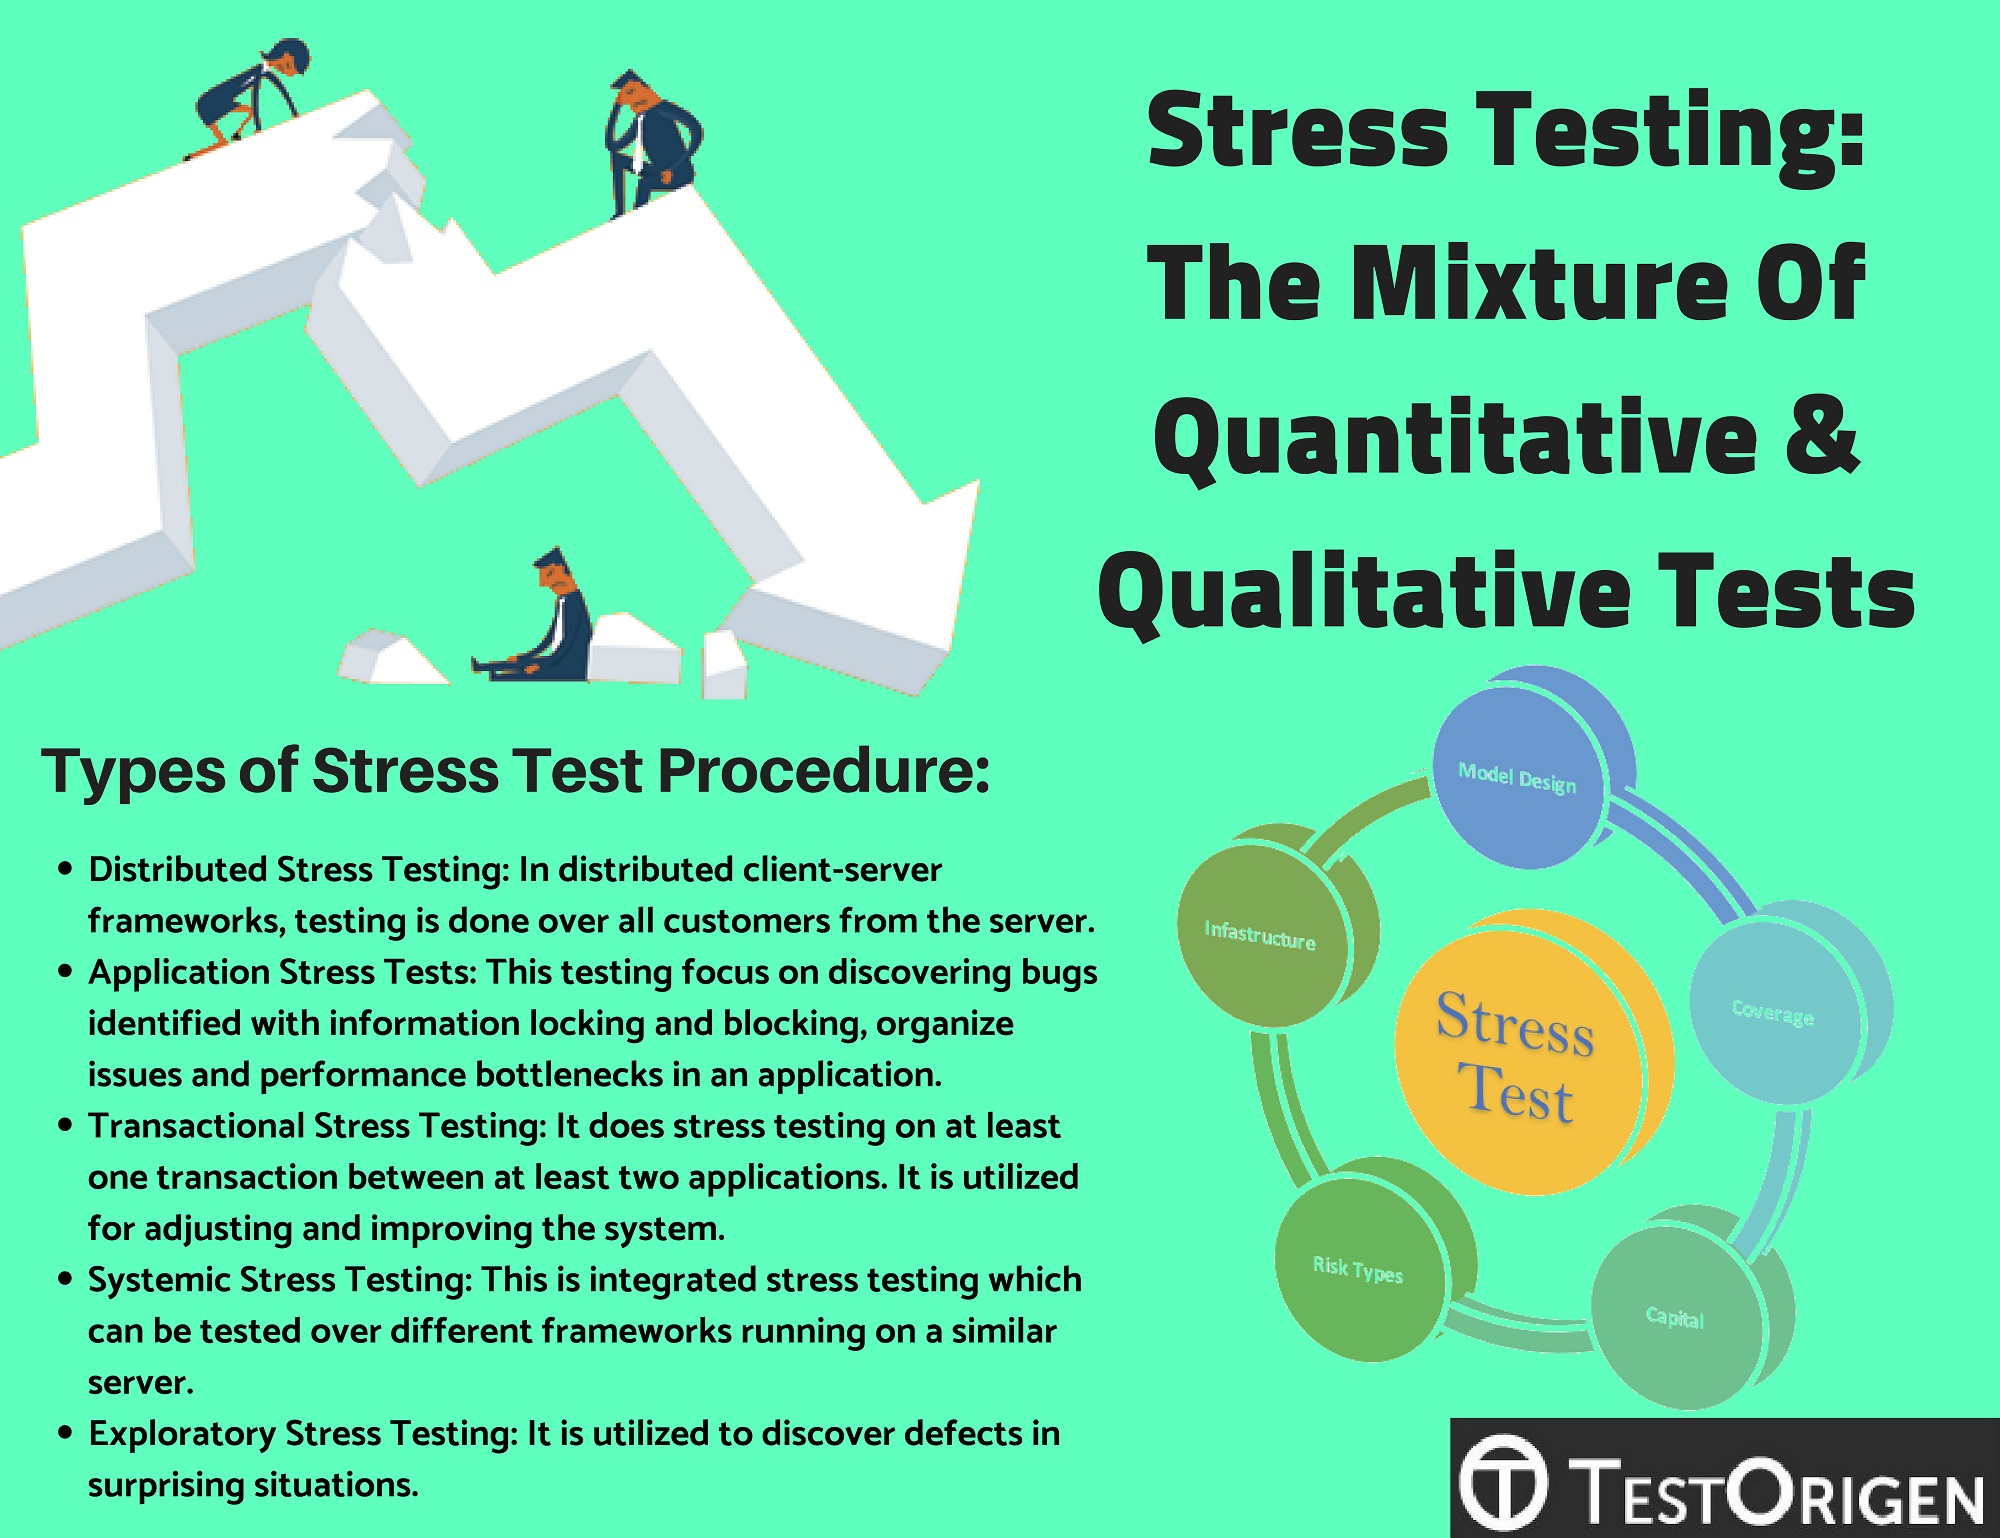 Stress Testing: The Mixture Of Quantitative & Qualitative Tests